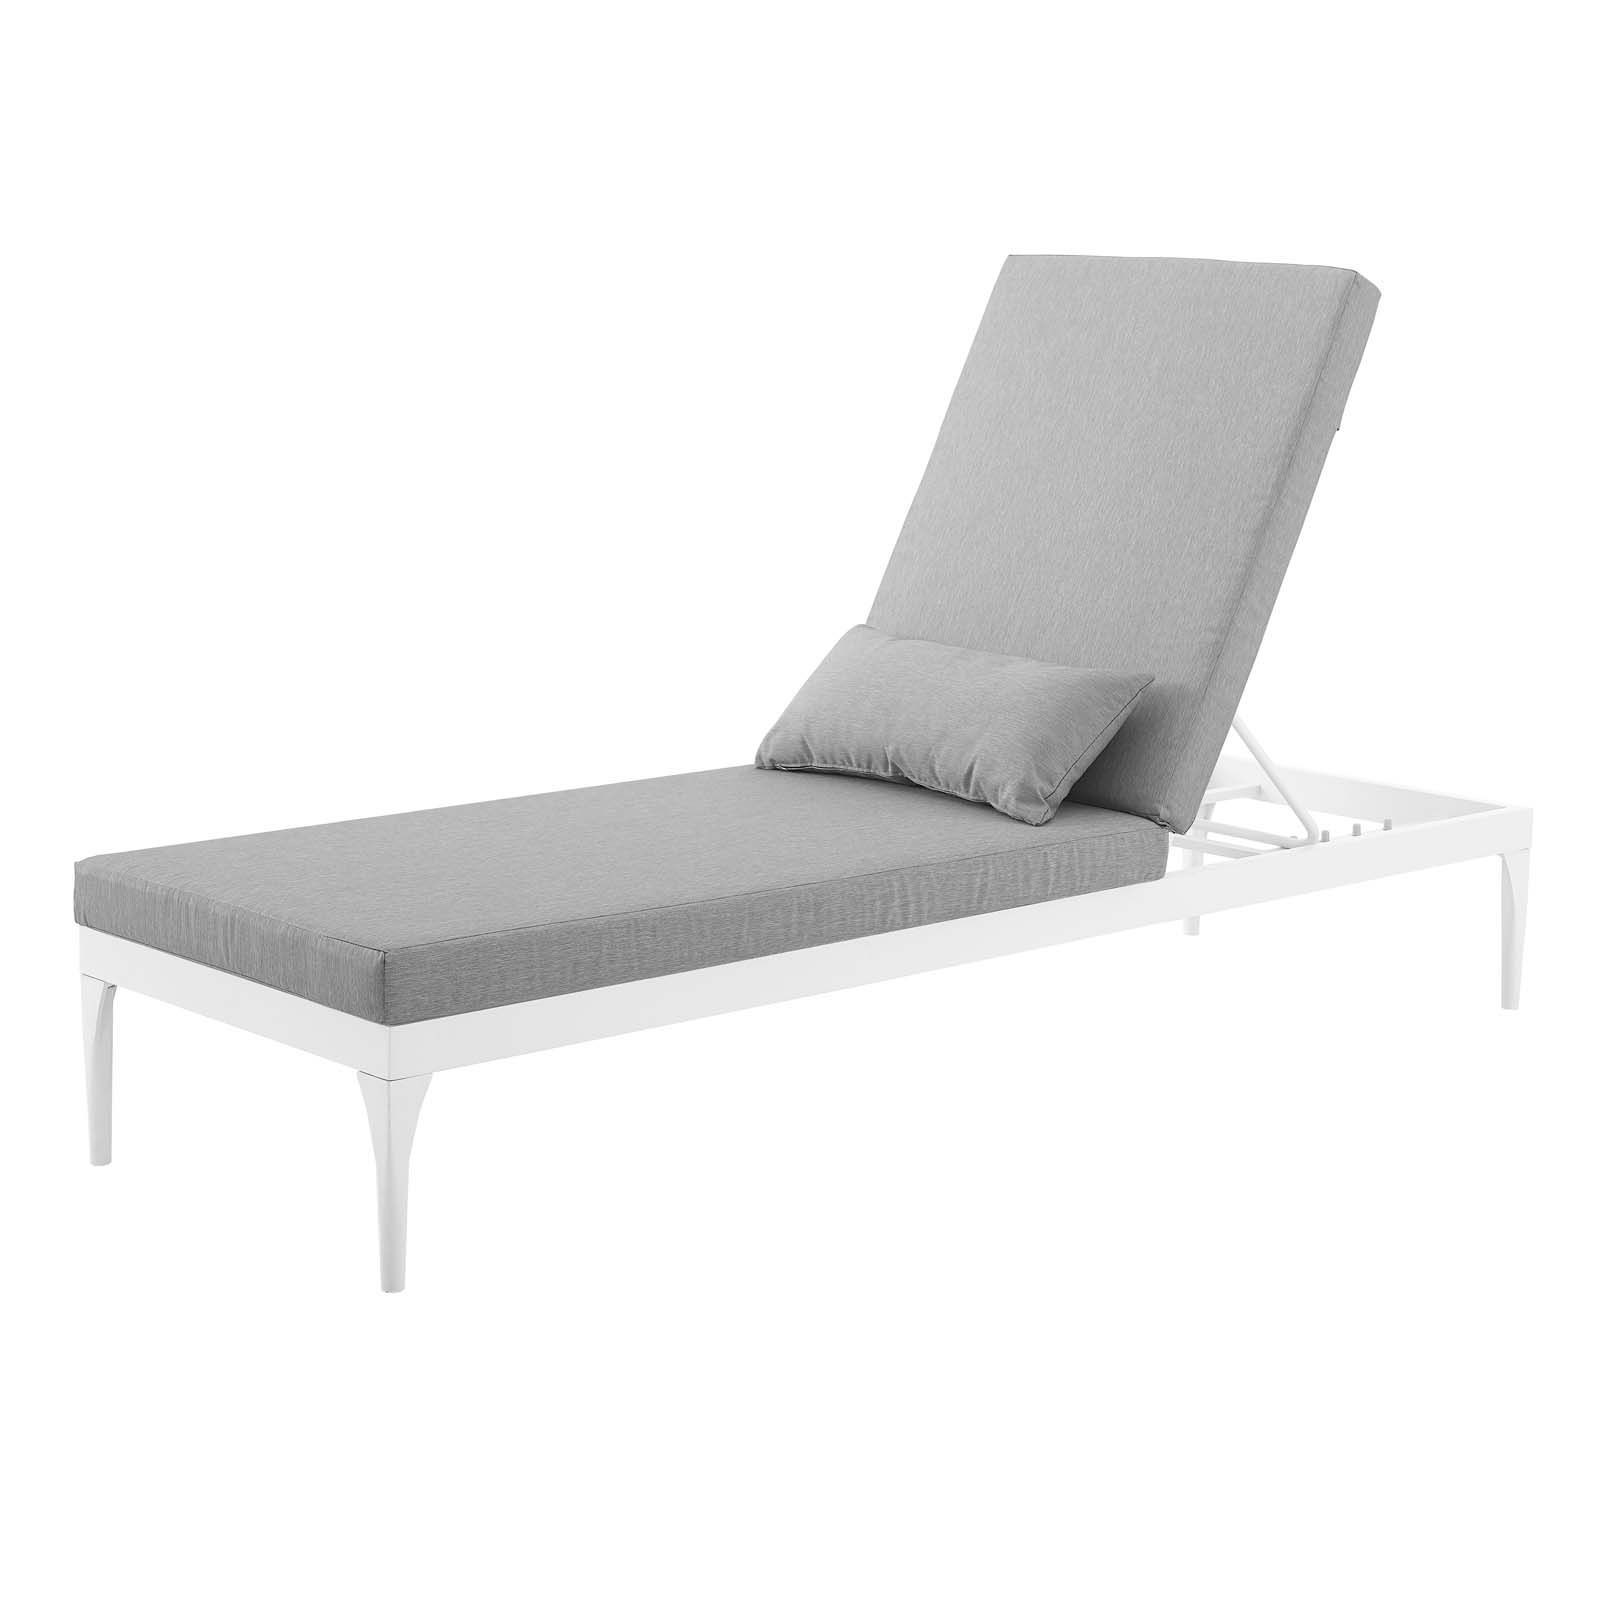 Modern Contemporary Urban Design Outdoor Patio Balcony Garden Furniture Lounge Chair Chaise, Fabric Aluminium, White Grey Gray - image 1 of 7